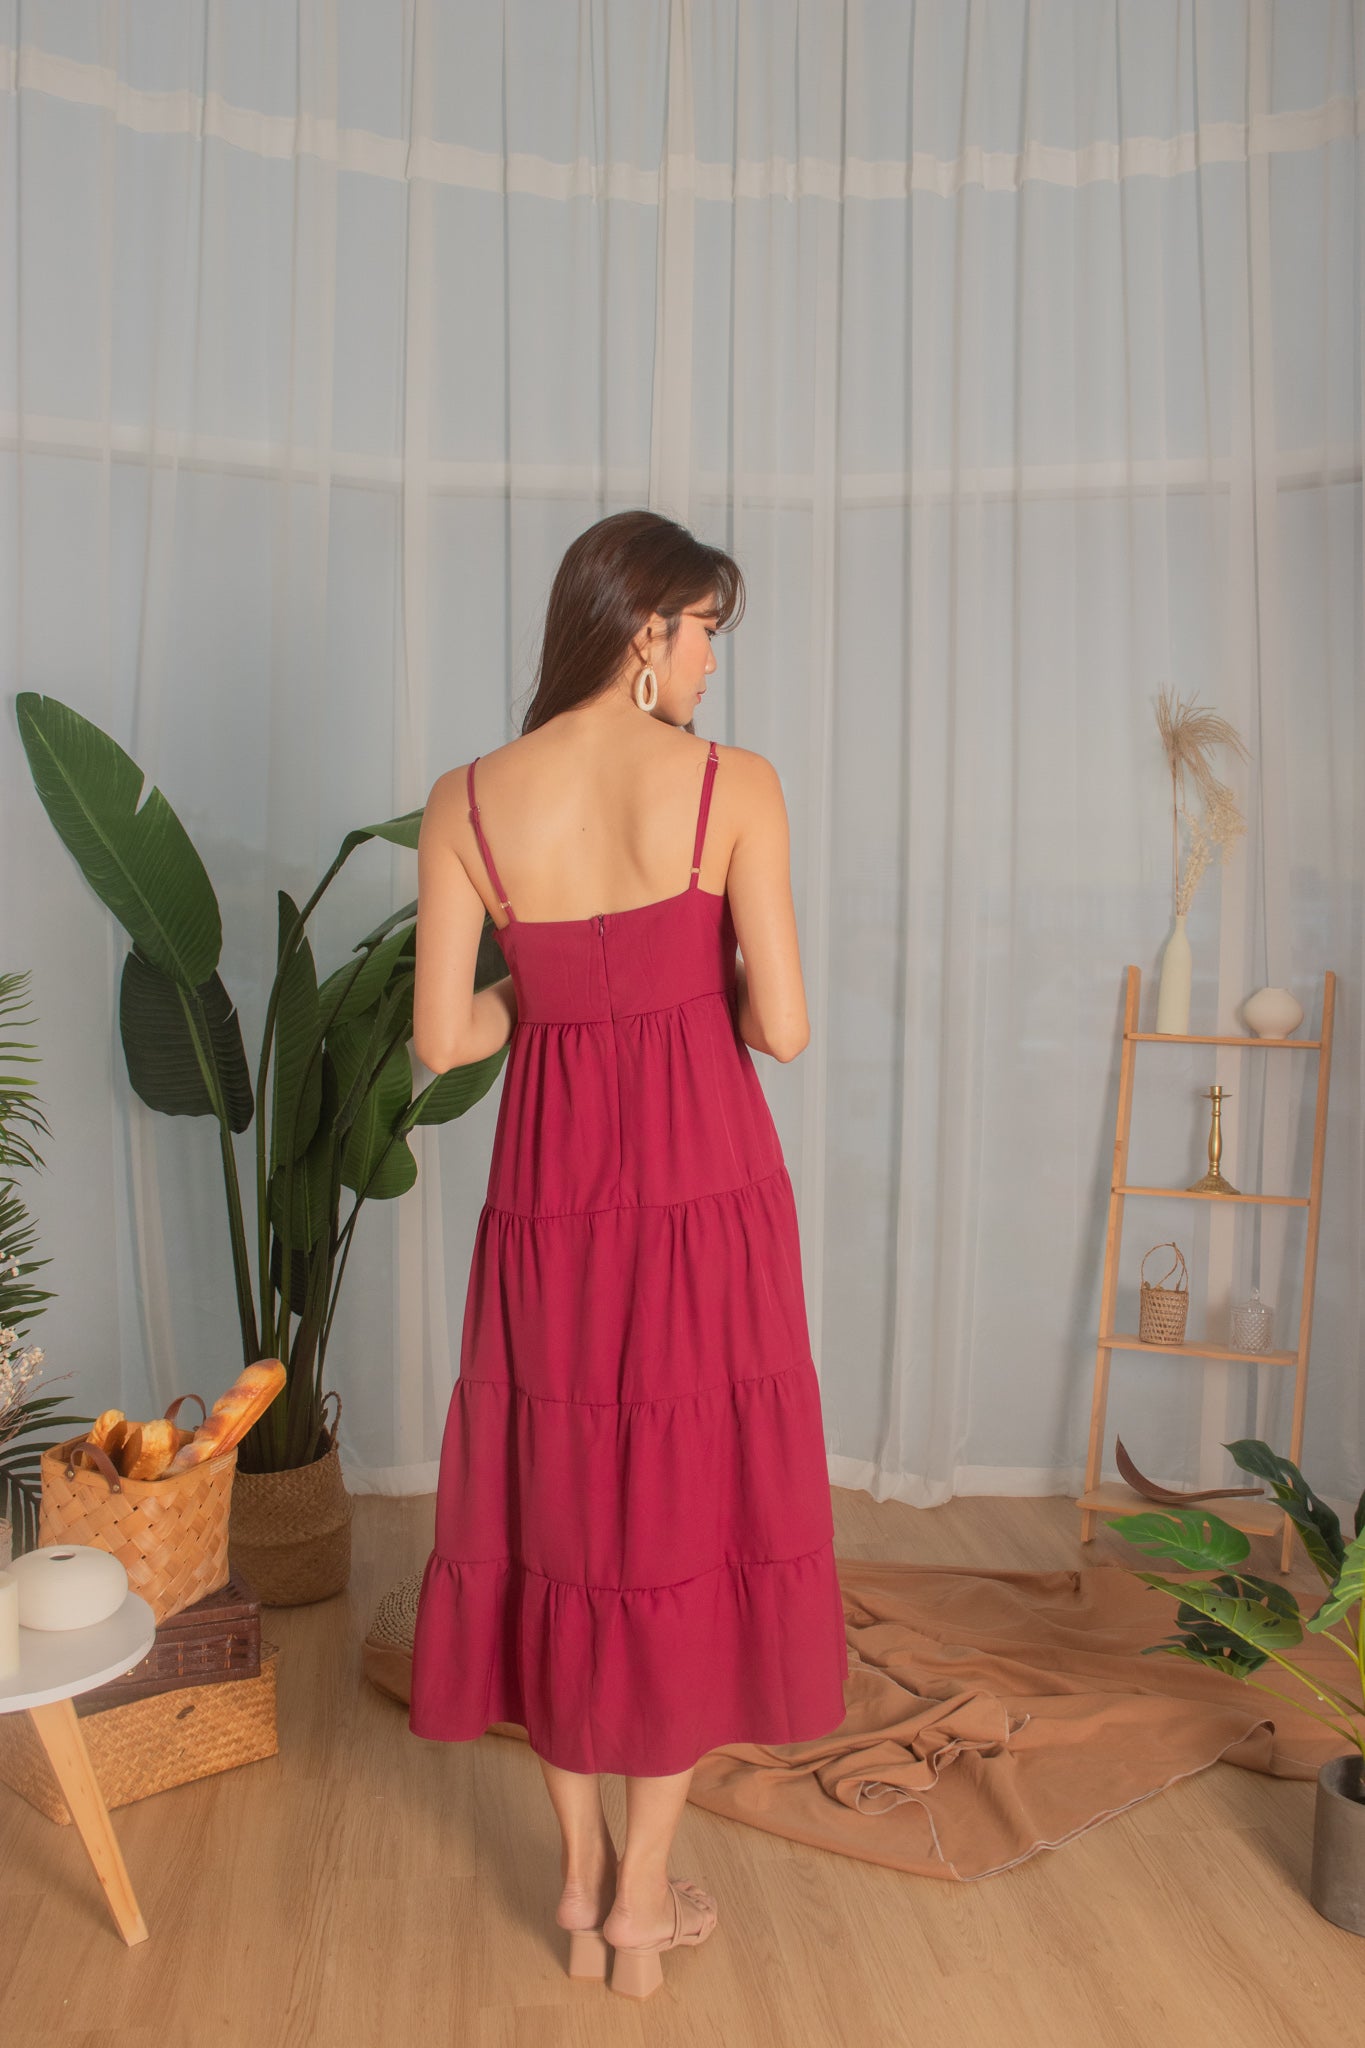 *PREMIUM* - Joeylia Tiered Maxi Dress in Dark Magenta Red- Self Manufactured by LBRLABEL